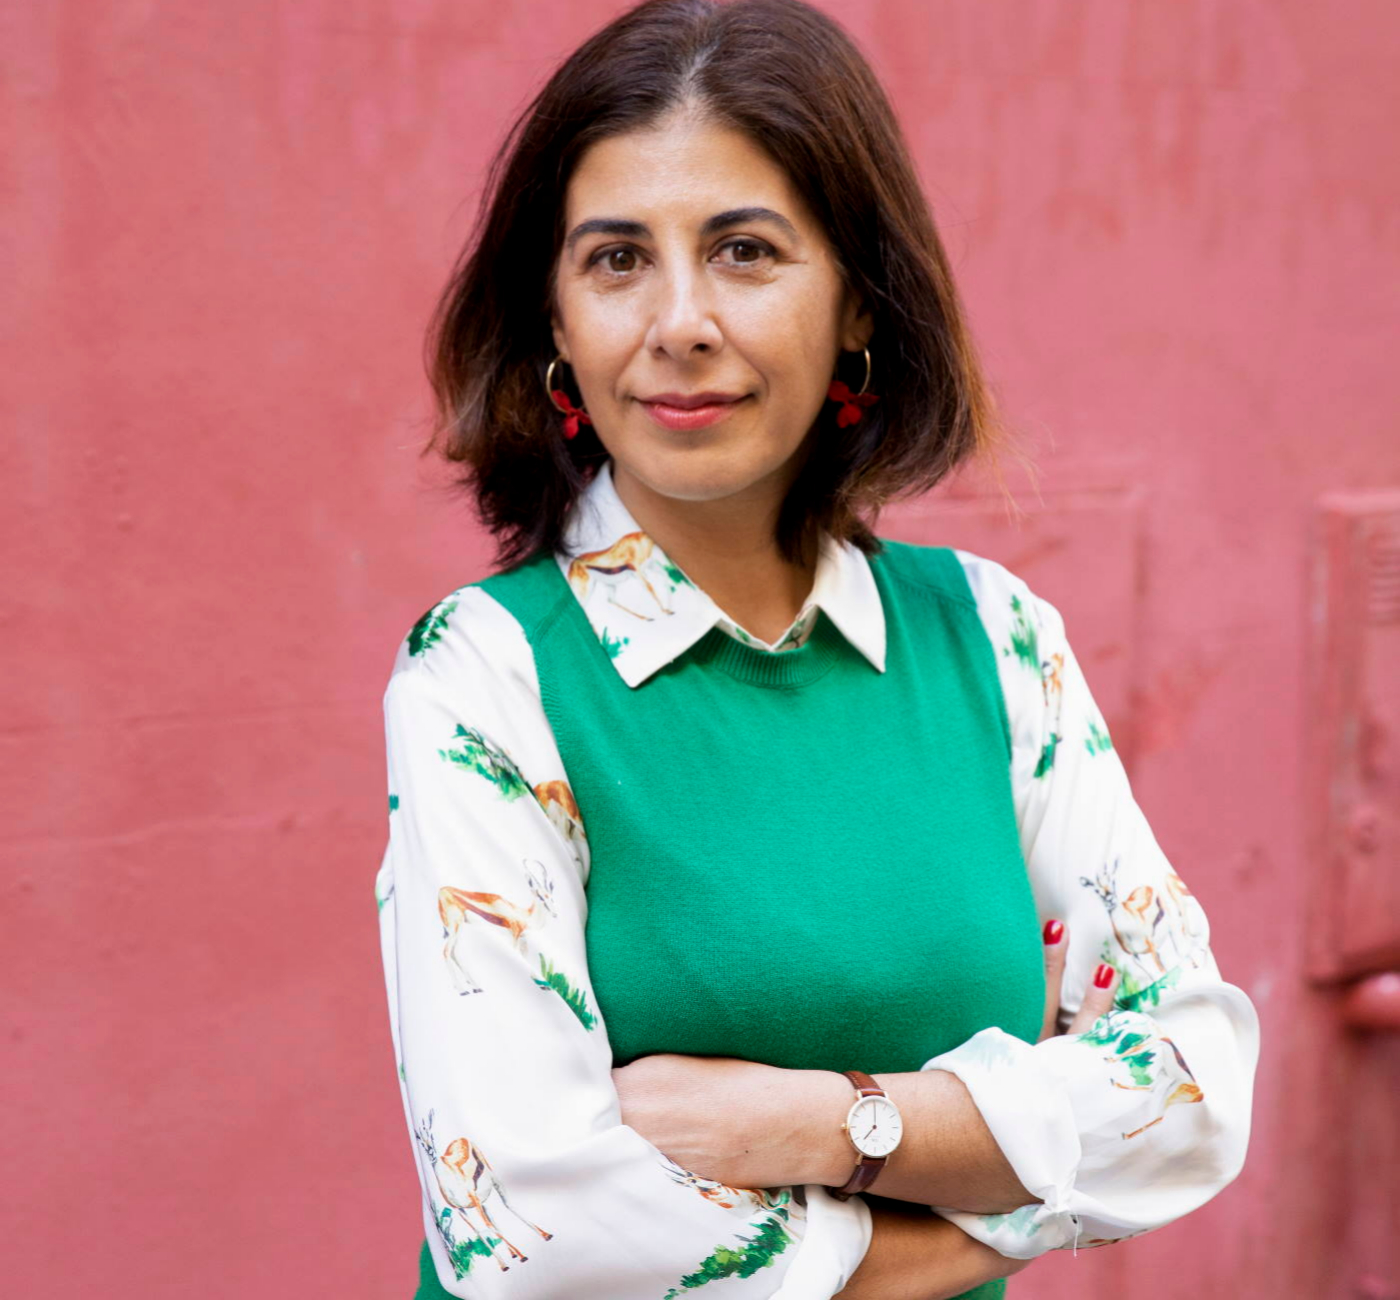 Nuria Pérez, creadora del podcast Gabinete de curiosidades